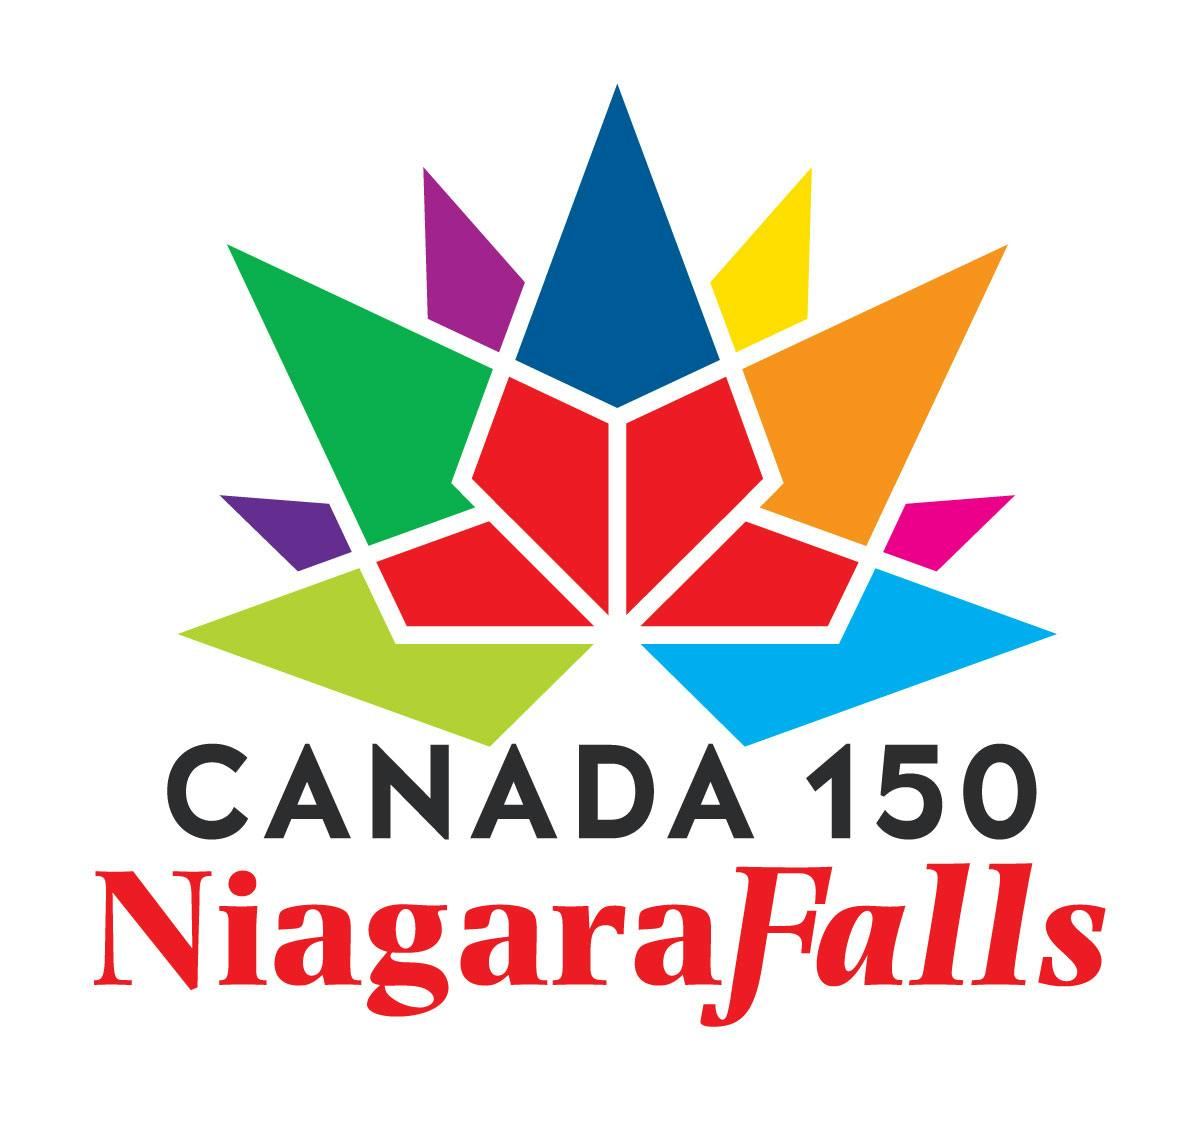 Canada 150 Niagara Falls